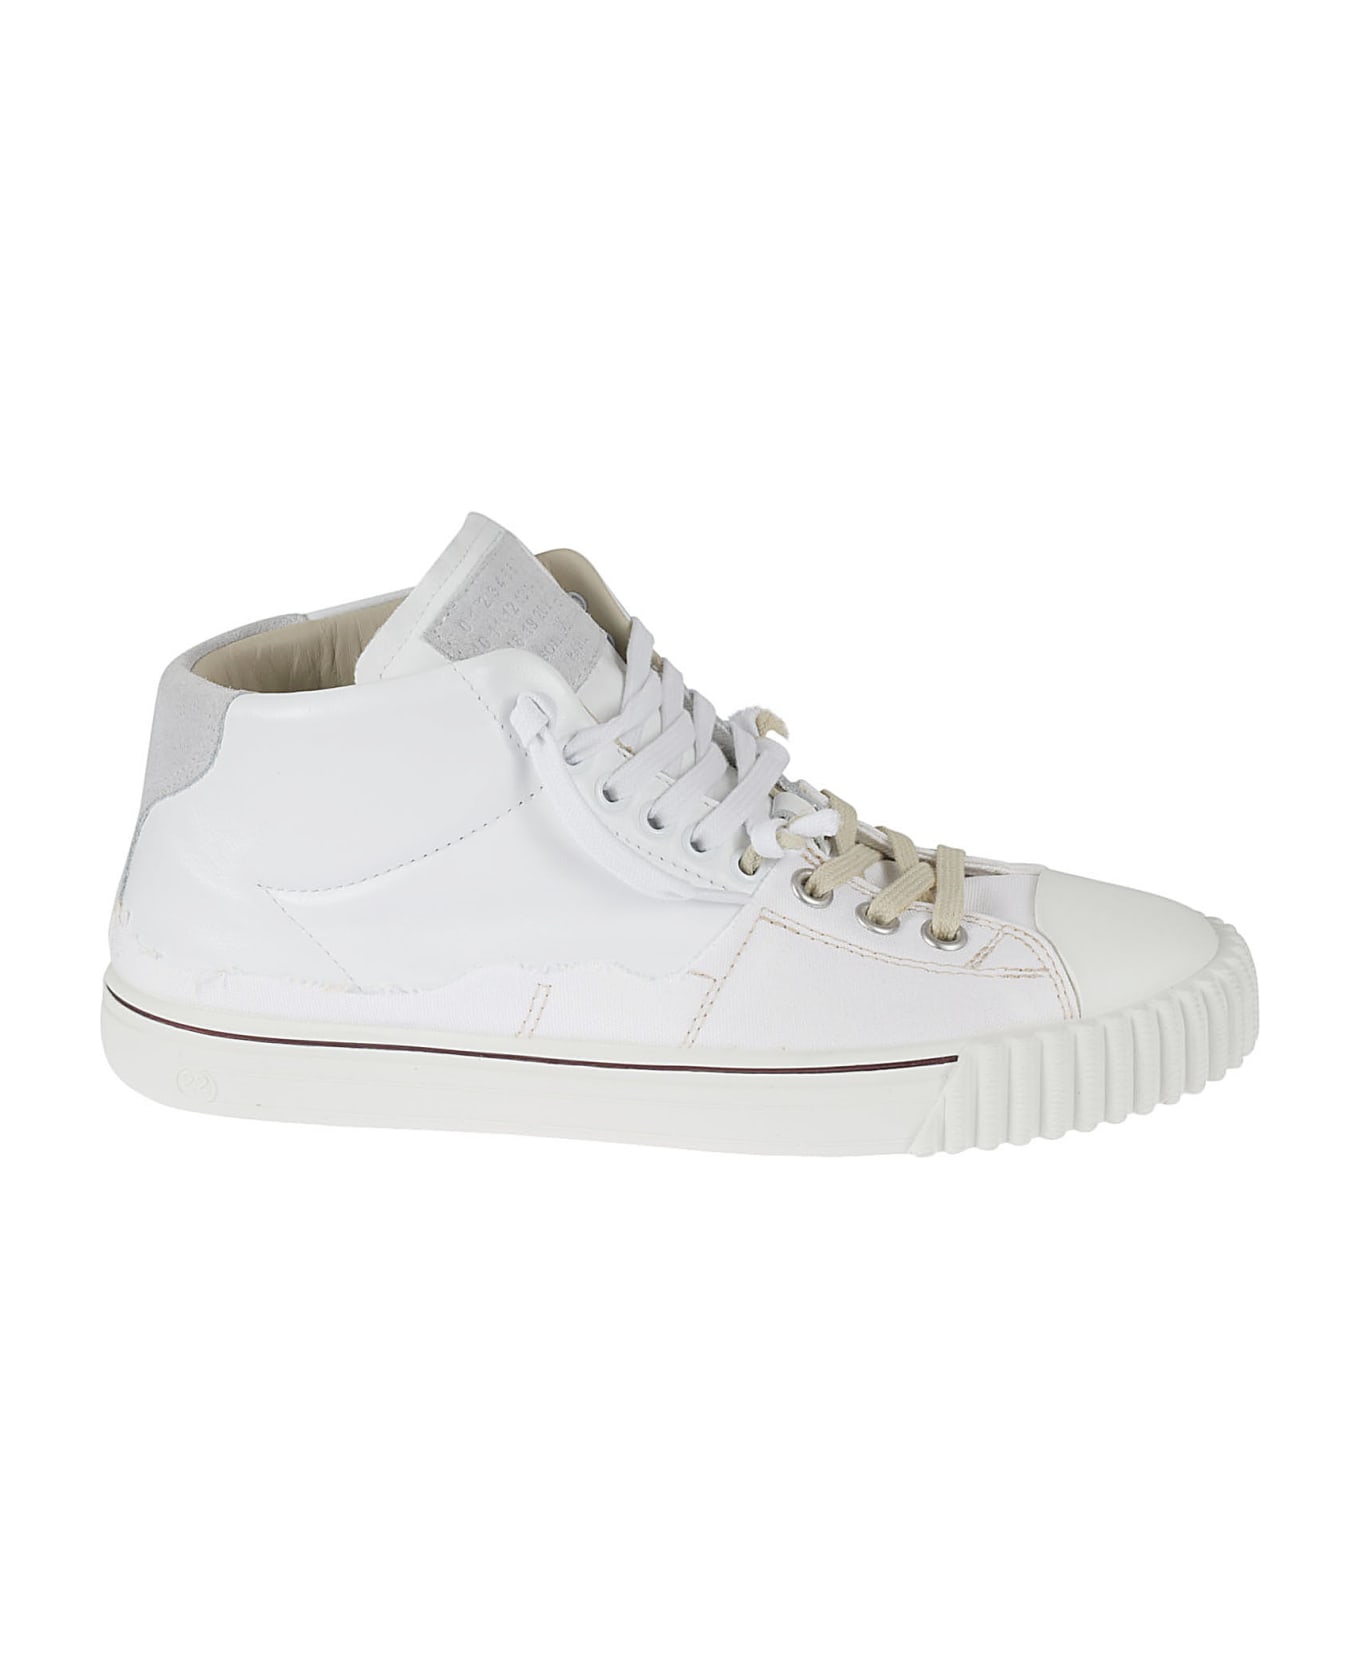 Maison Margiela Evolution Mid Sneakers - White Off White